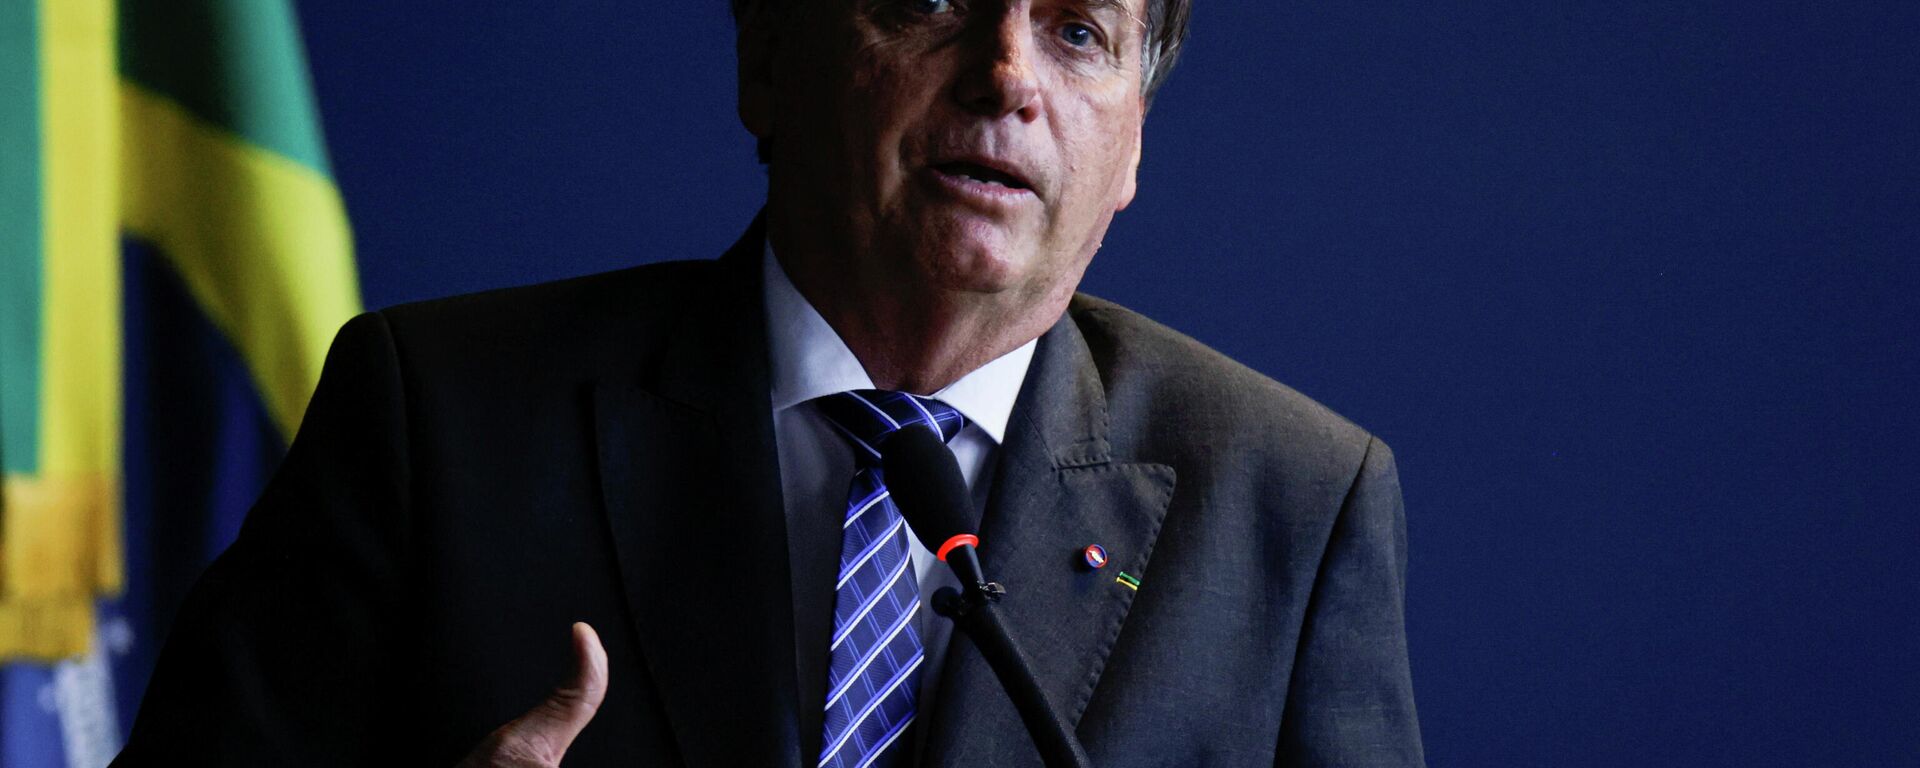 Jair Bolsonaro, presidente de Brasil - Sputnik Mundo, 1920, 09.12.2021